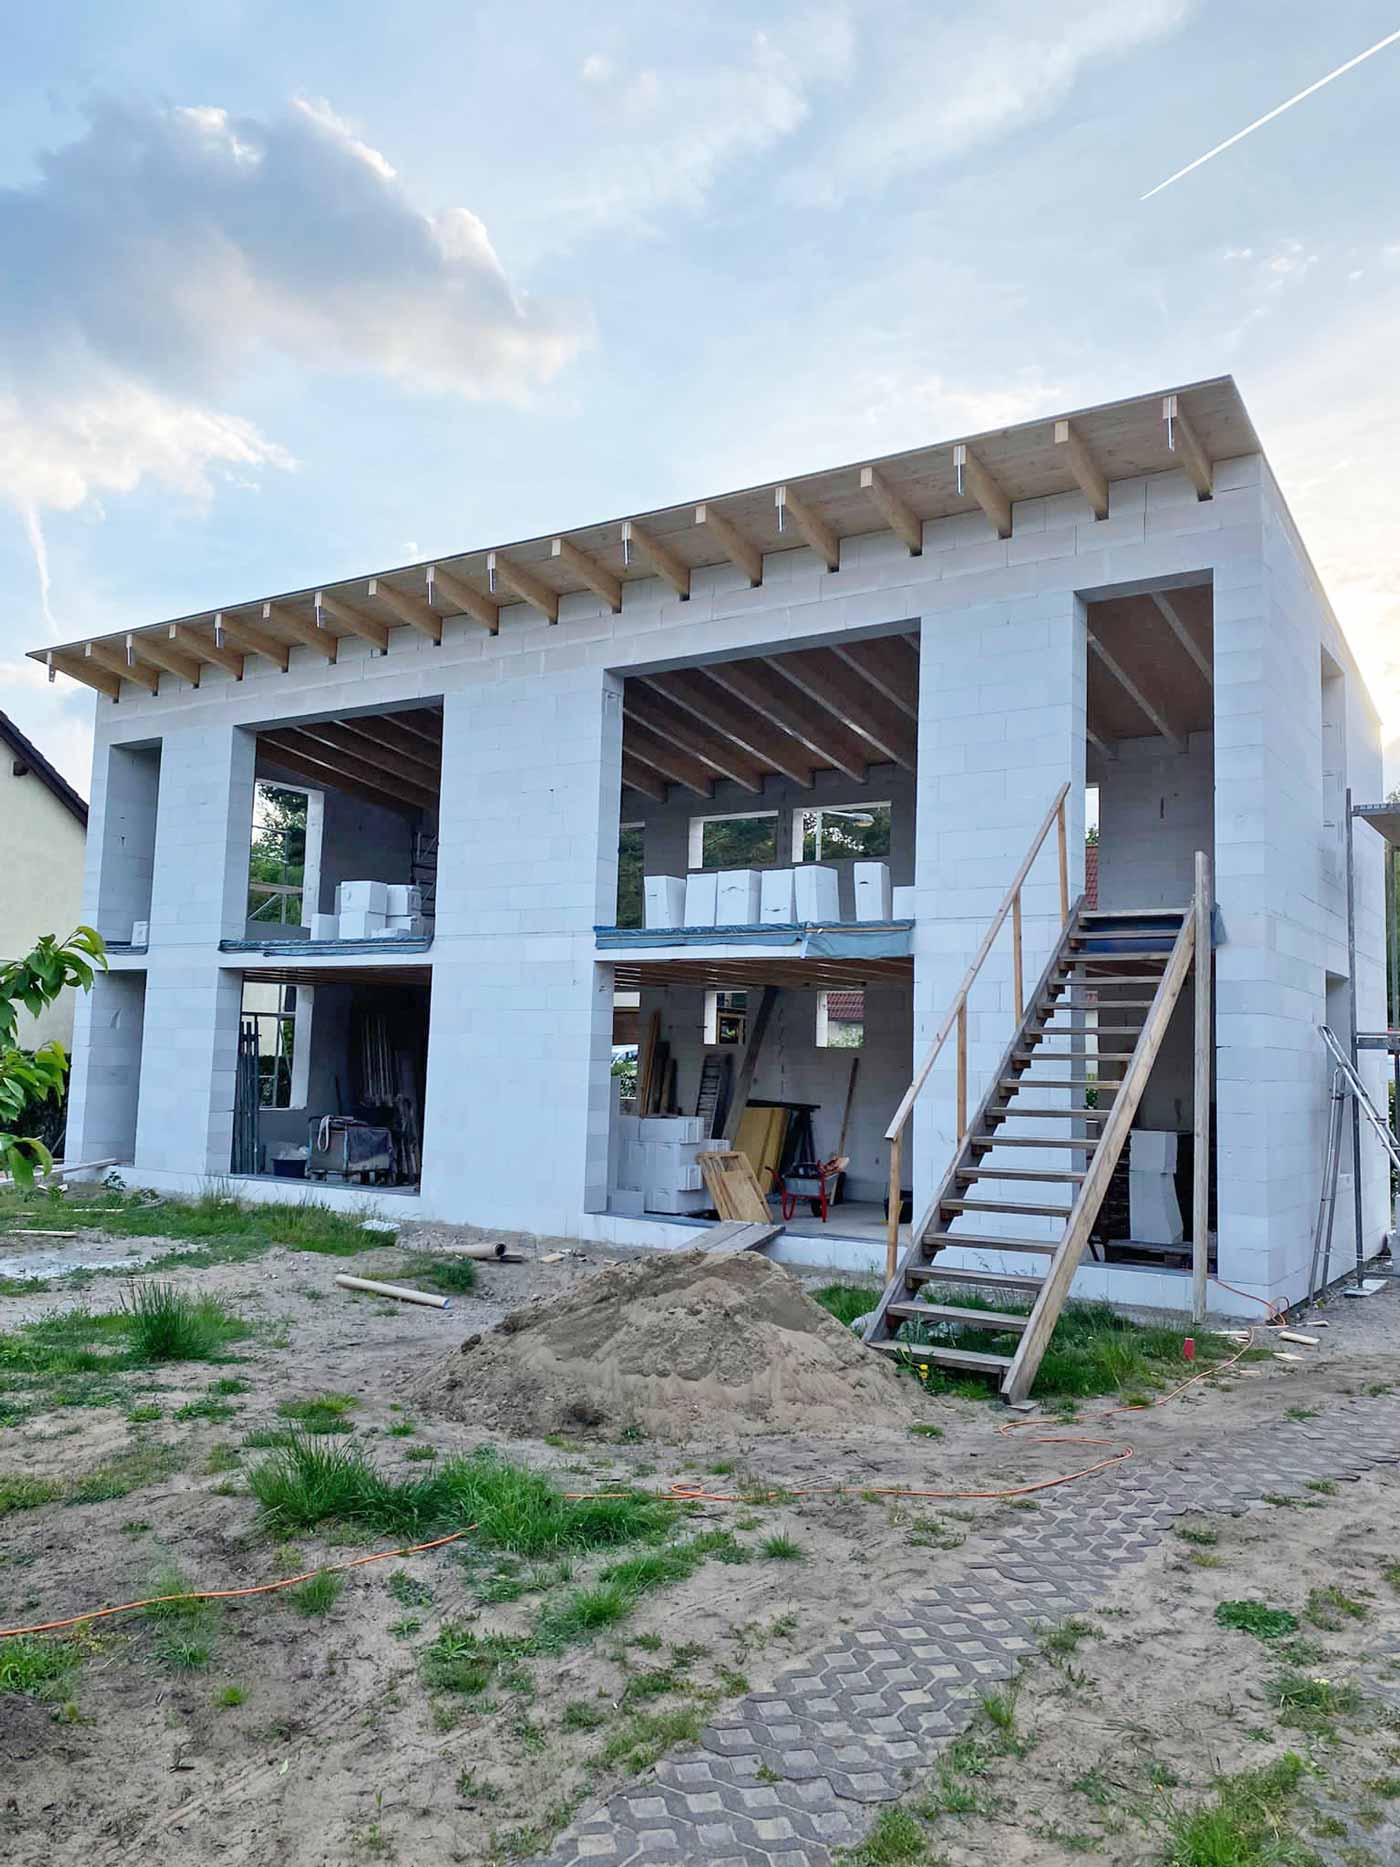 STUDIOKUBIK-studio-kubik-architektur-architecture-berlin-two-family-house-semi-detached-house-baustelle3